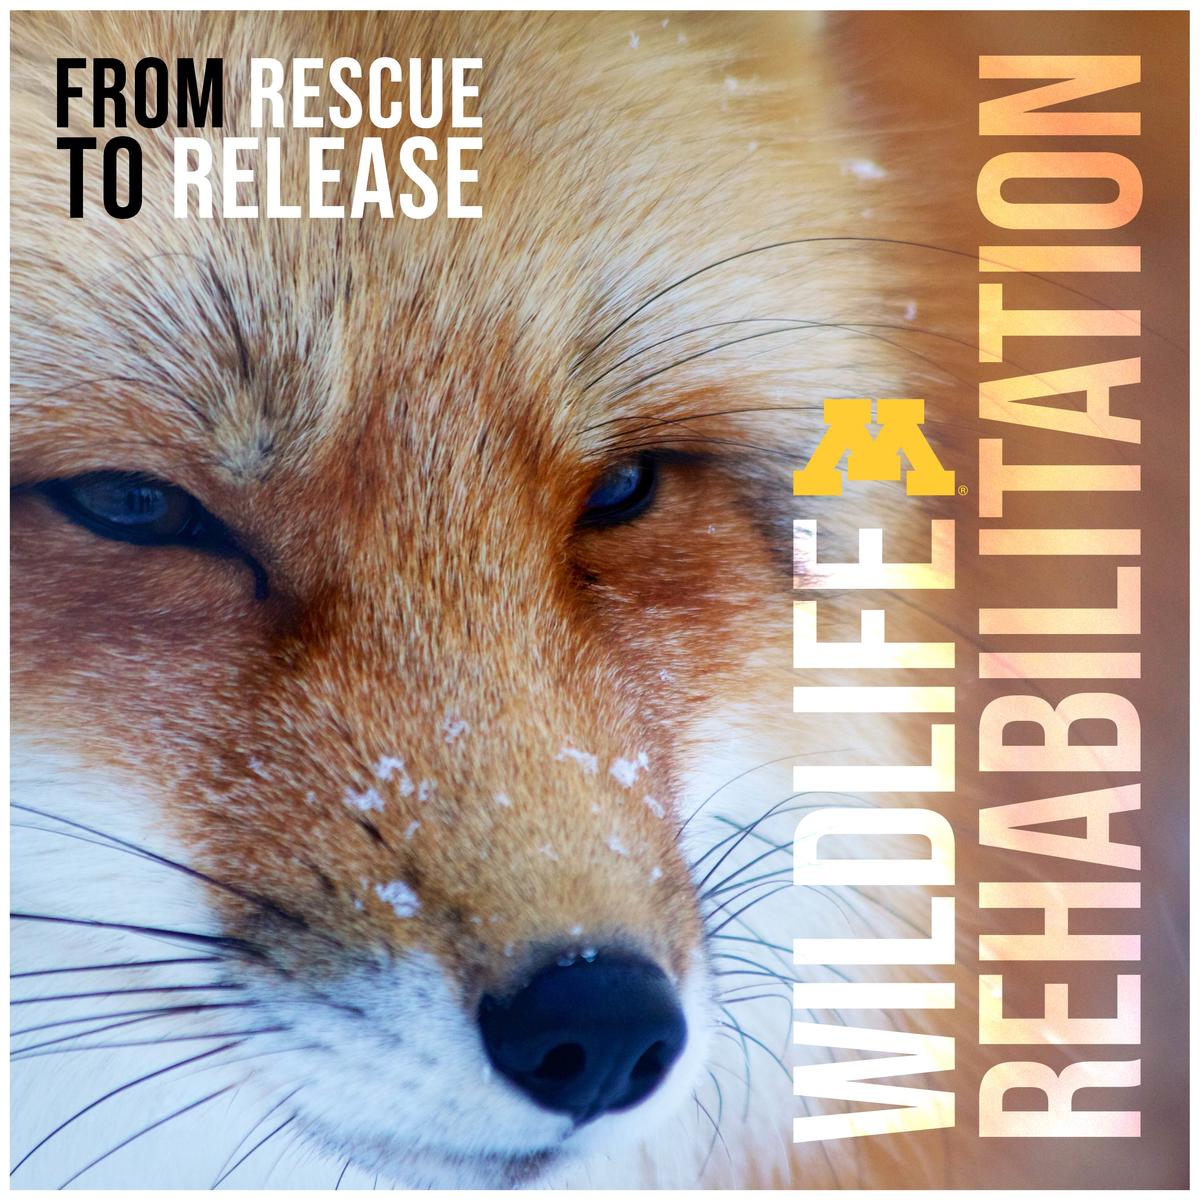 From rescue to release - wildlife rehabilitation logo